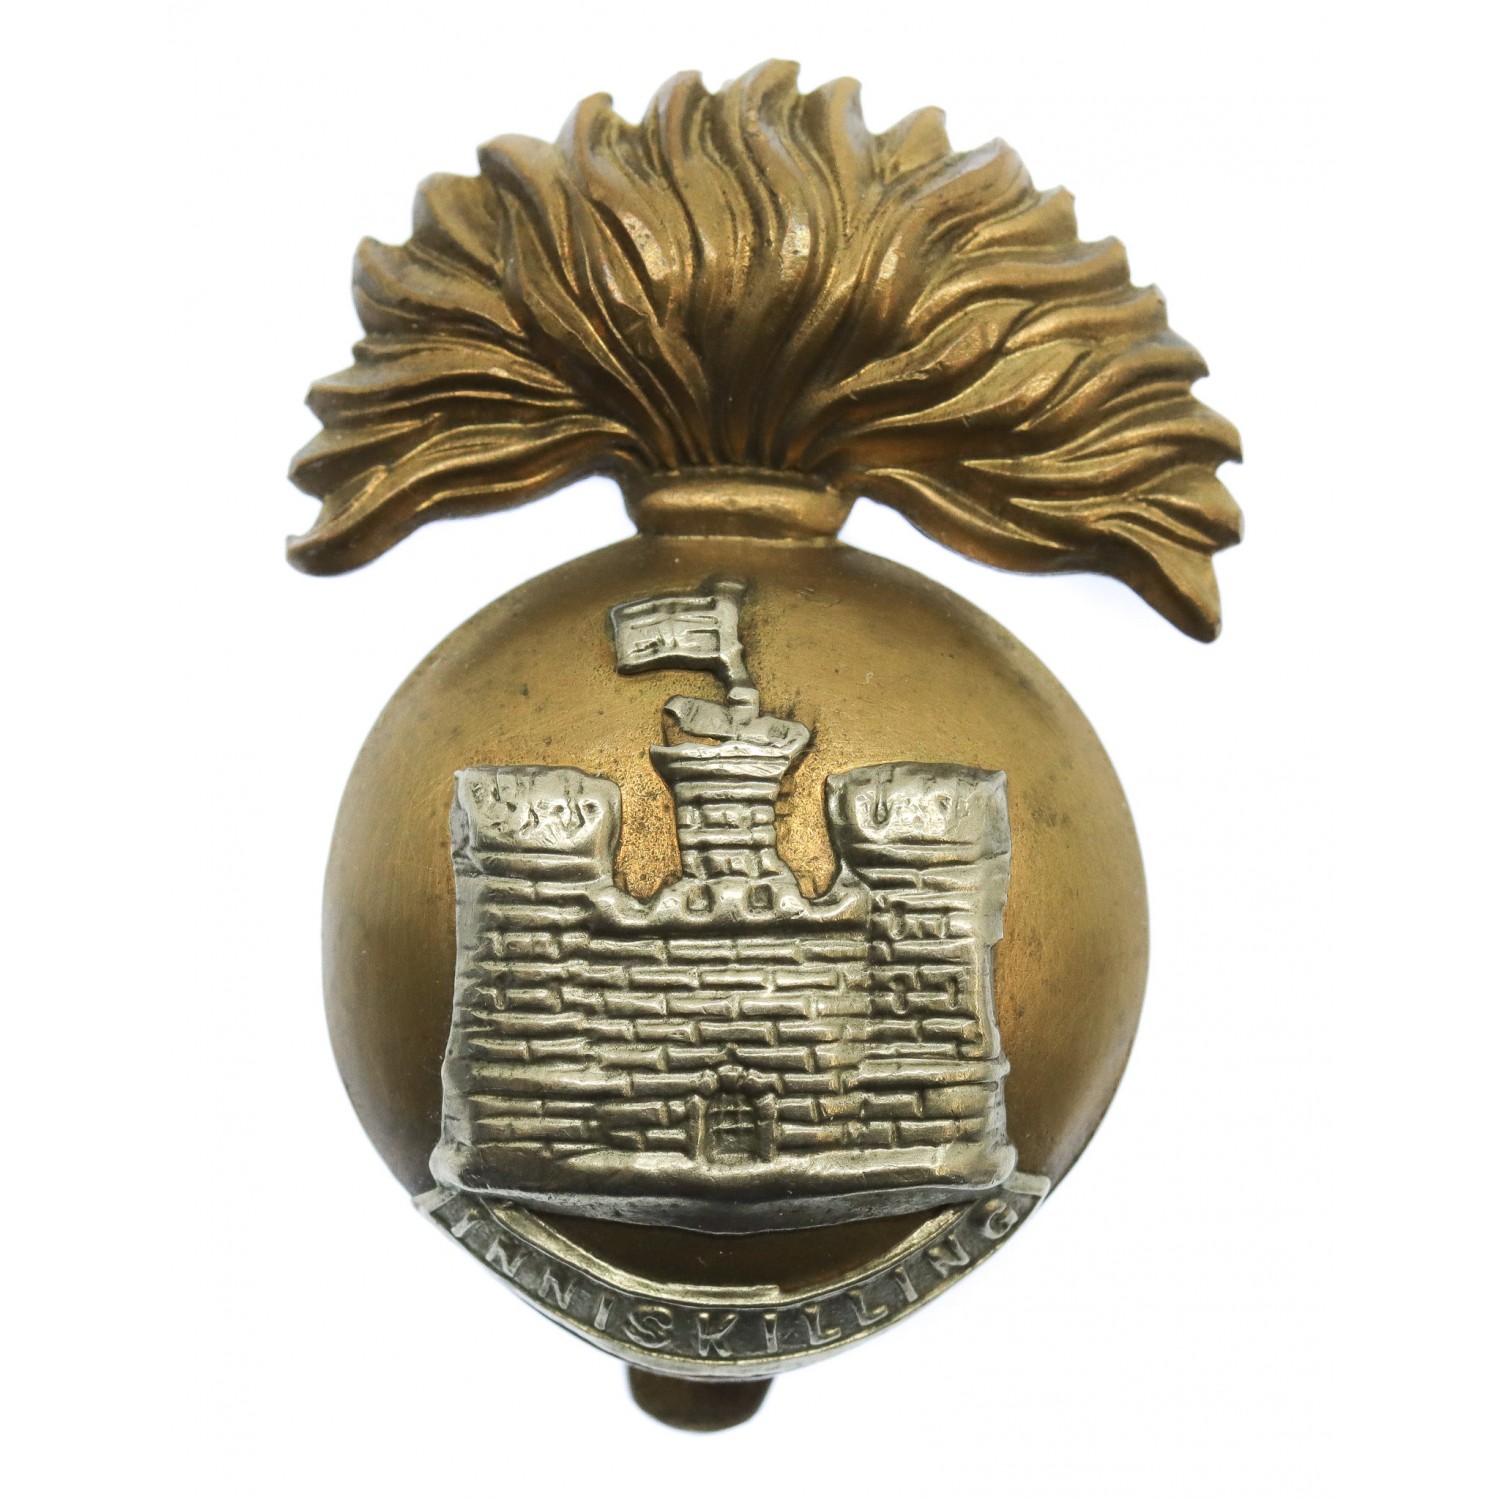 Royal Inniskilling Fusiliers Cap Badge (Flag Left)